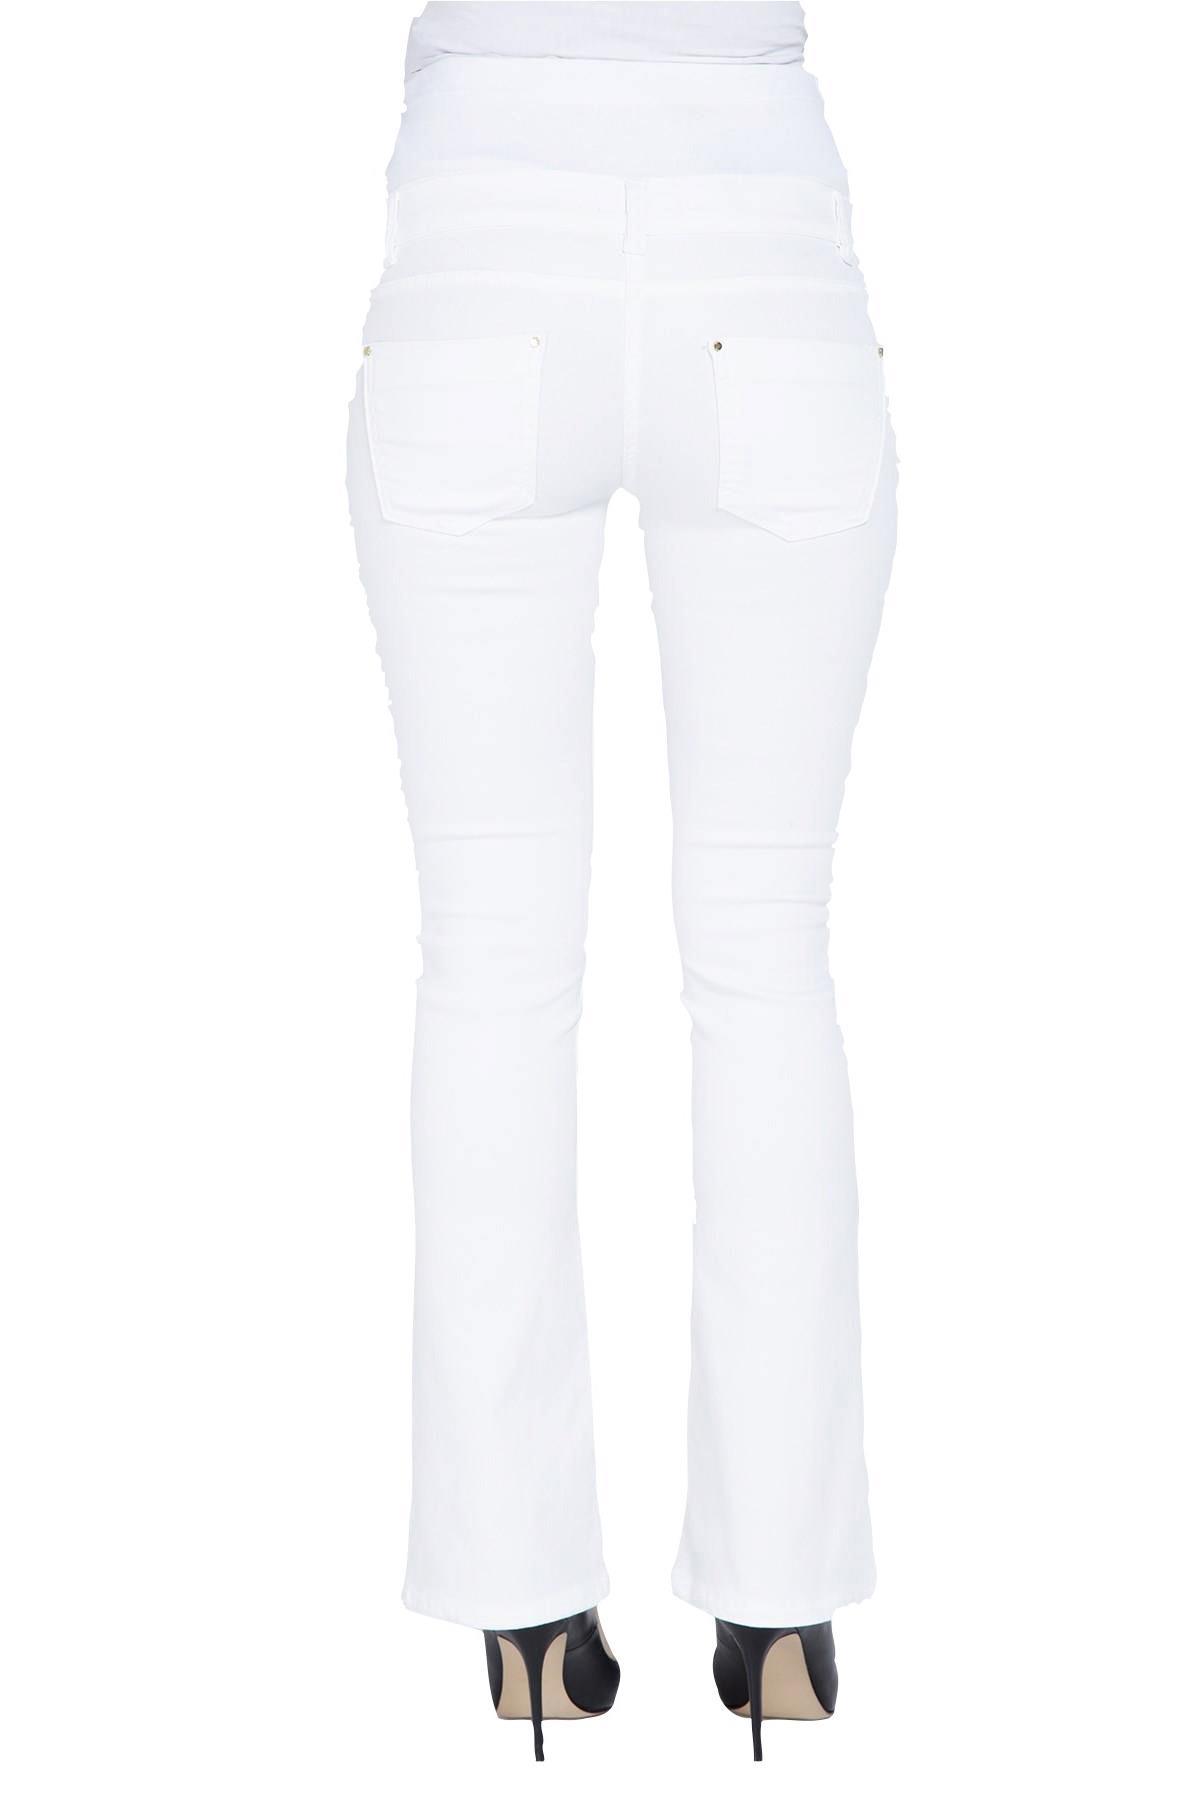 fierte-kadin-pantolon-rg3417-hamile-pamuk-elastik-bel-cep-ispanyol-paca-beyaz-25913.jpg